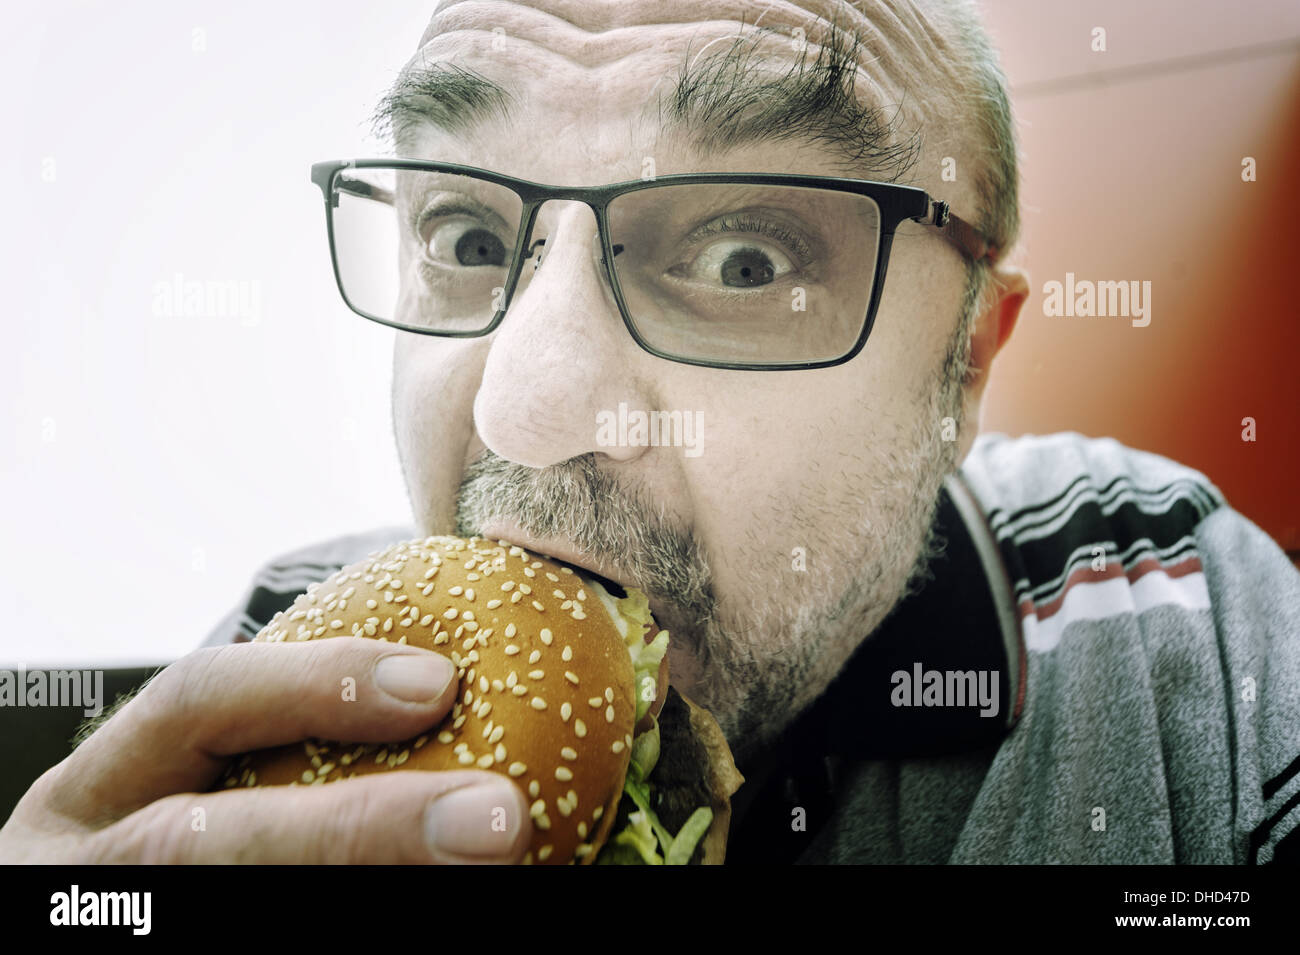 man eats a hamburger Stock Photo